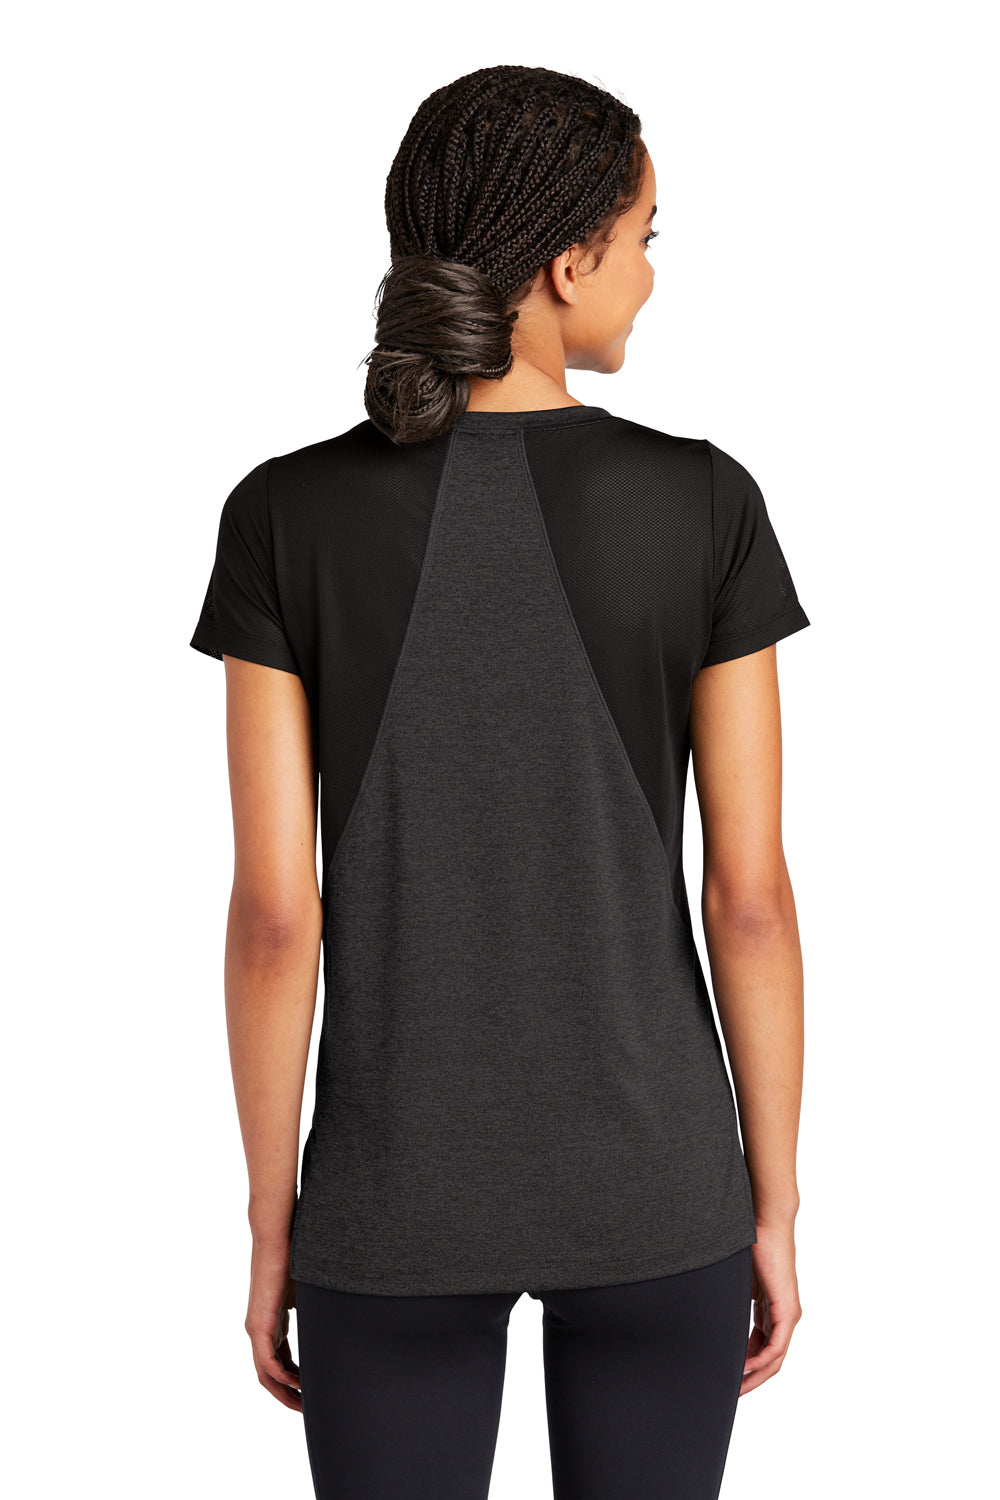 Sport-Tek Womens Endeavor Short Sleeve V-Neck T-Shirt Heather Black/Black Side